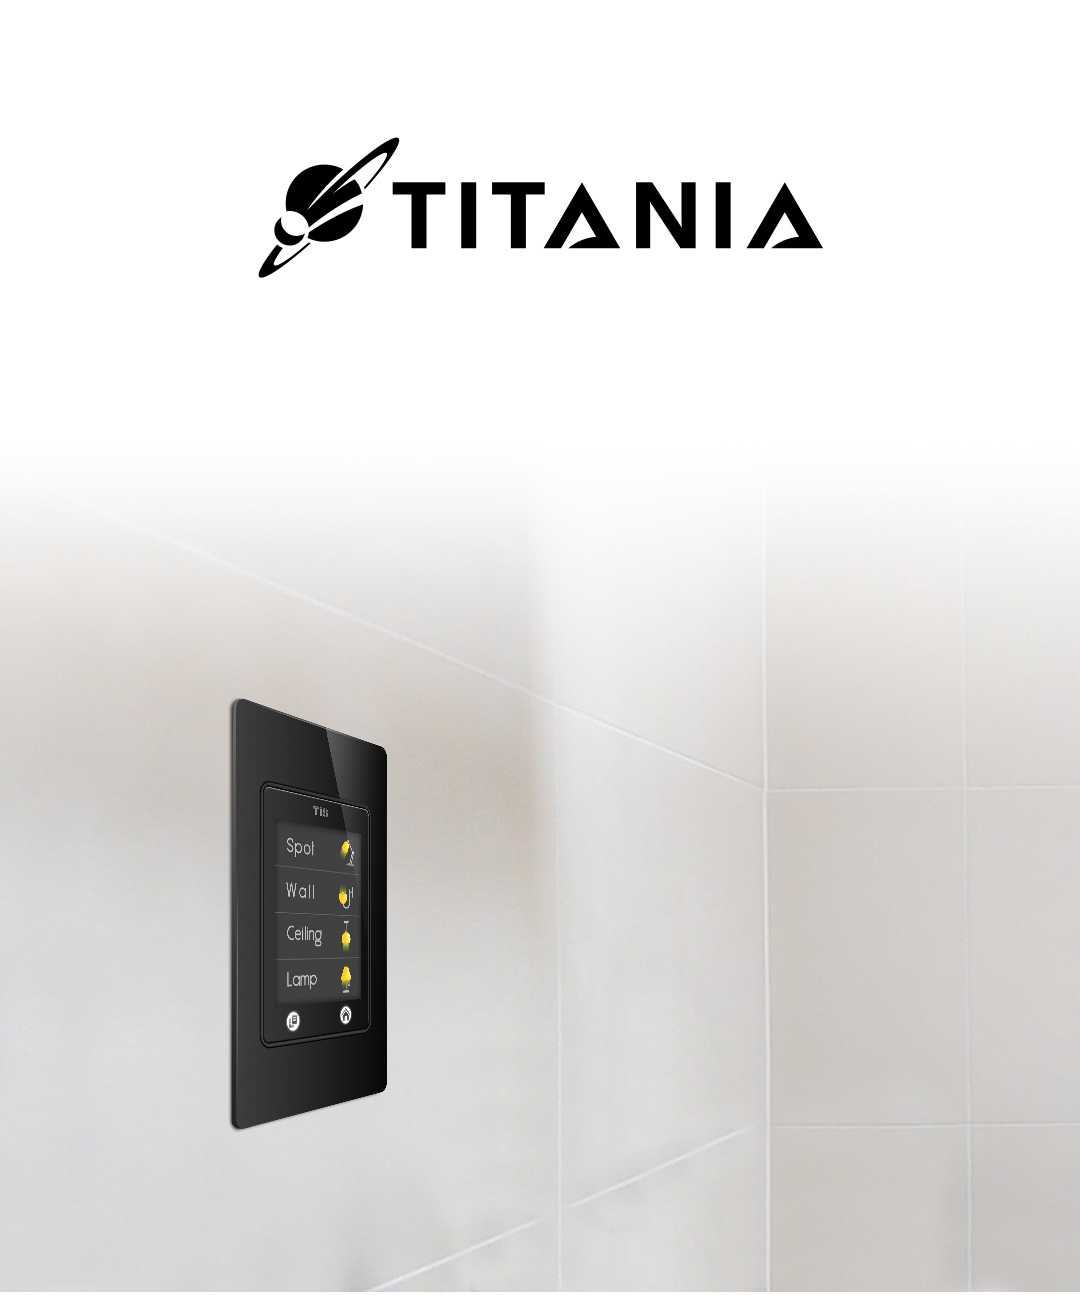 titan and titania